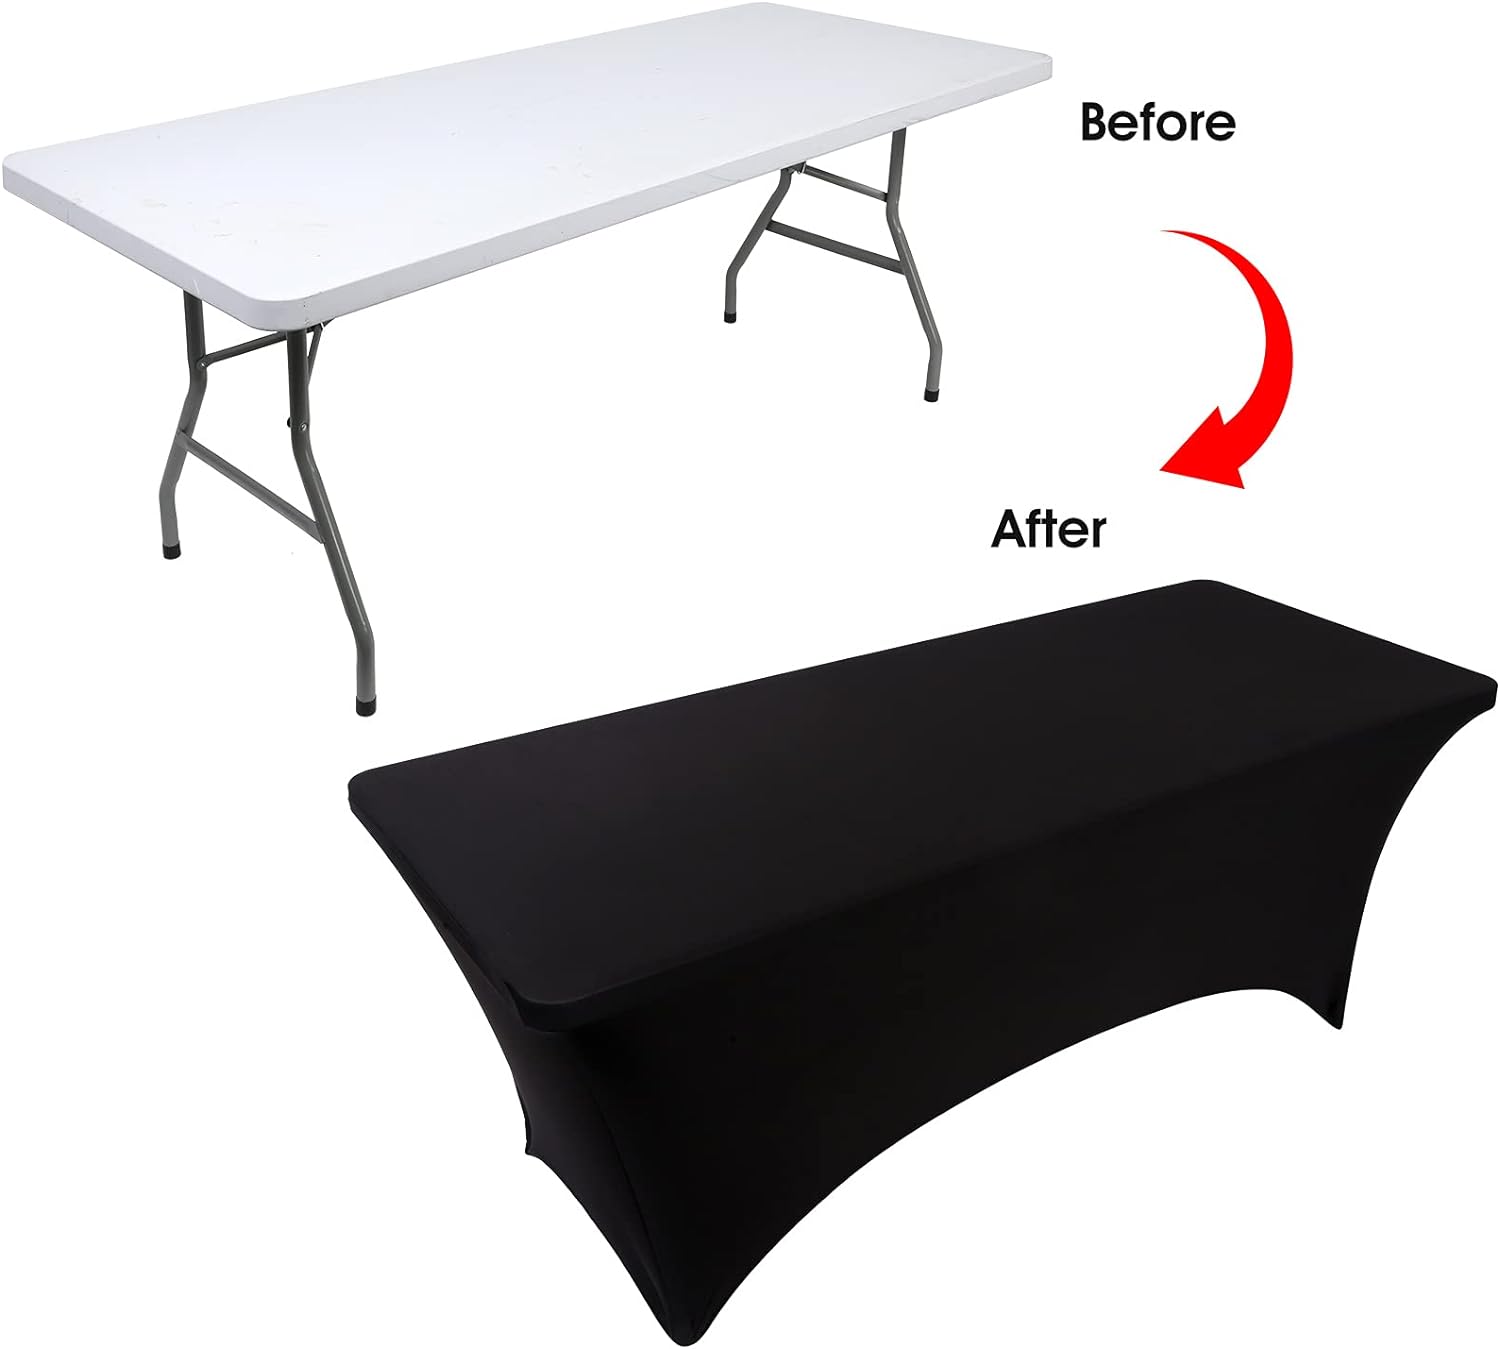 Mantel ajustable para mesas rectangulares manteles para fiestas bodas banquetes